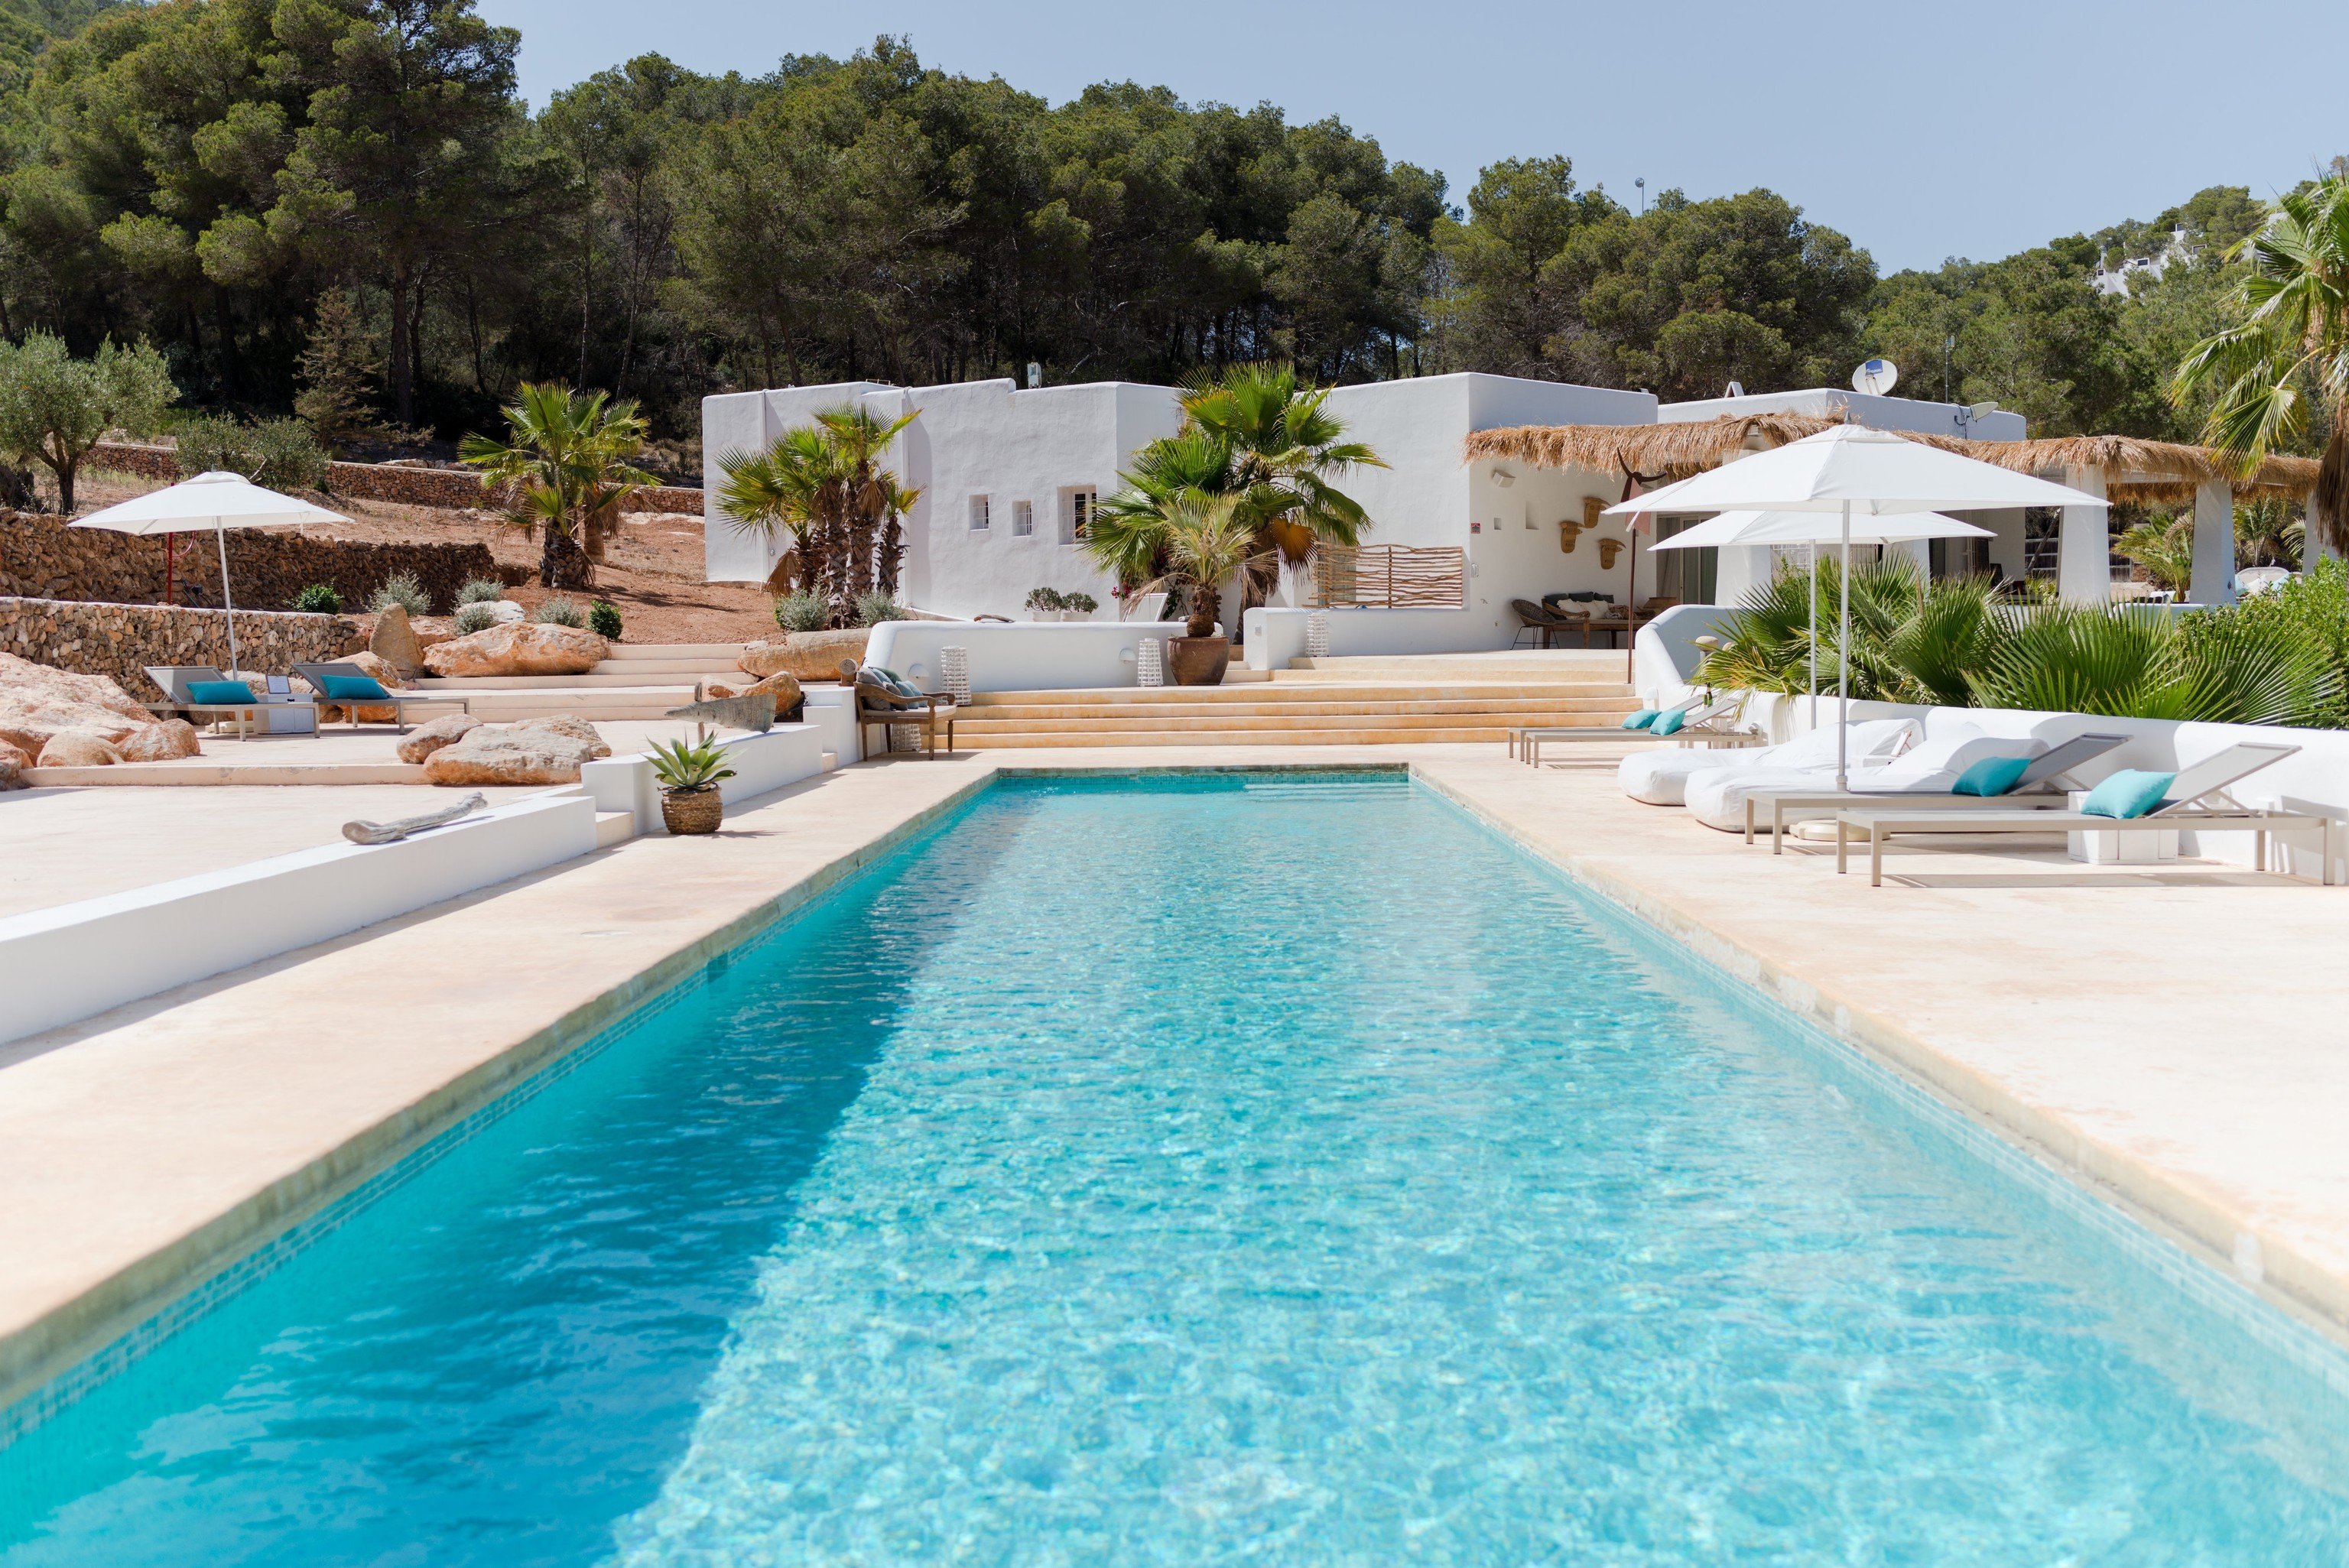 Book Ibiza Island hotels - Hotels.com